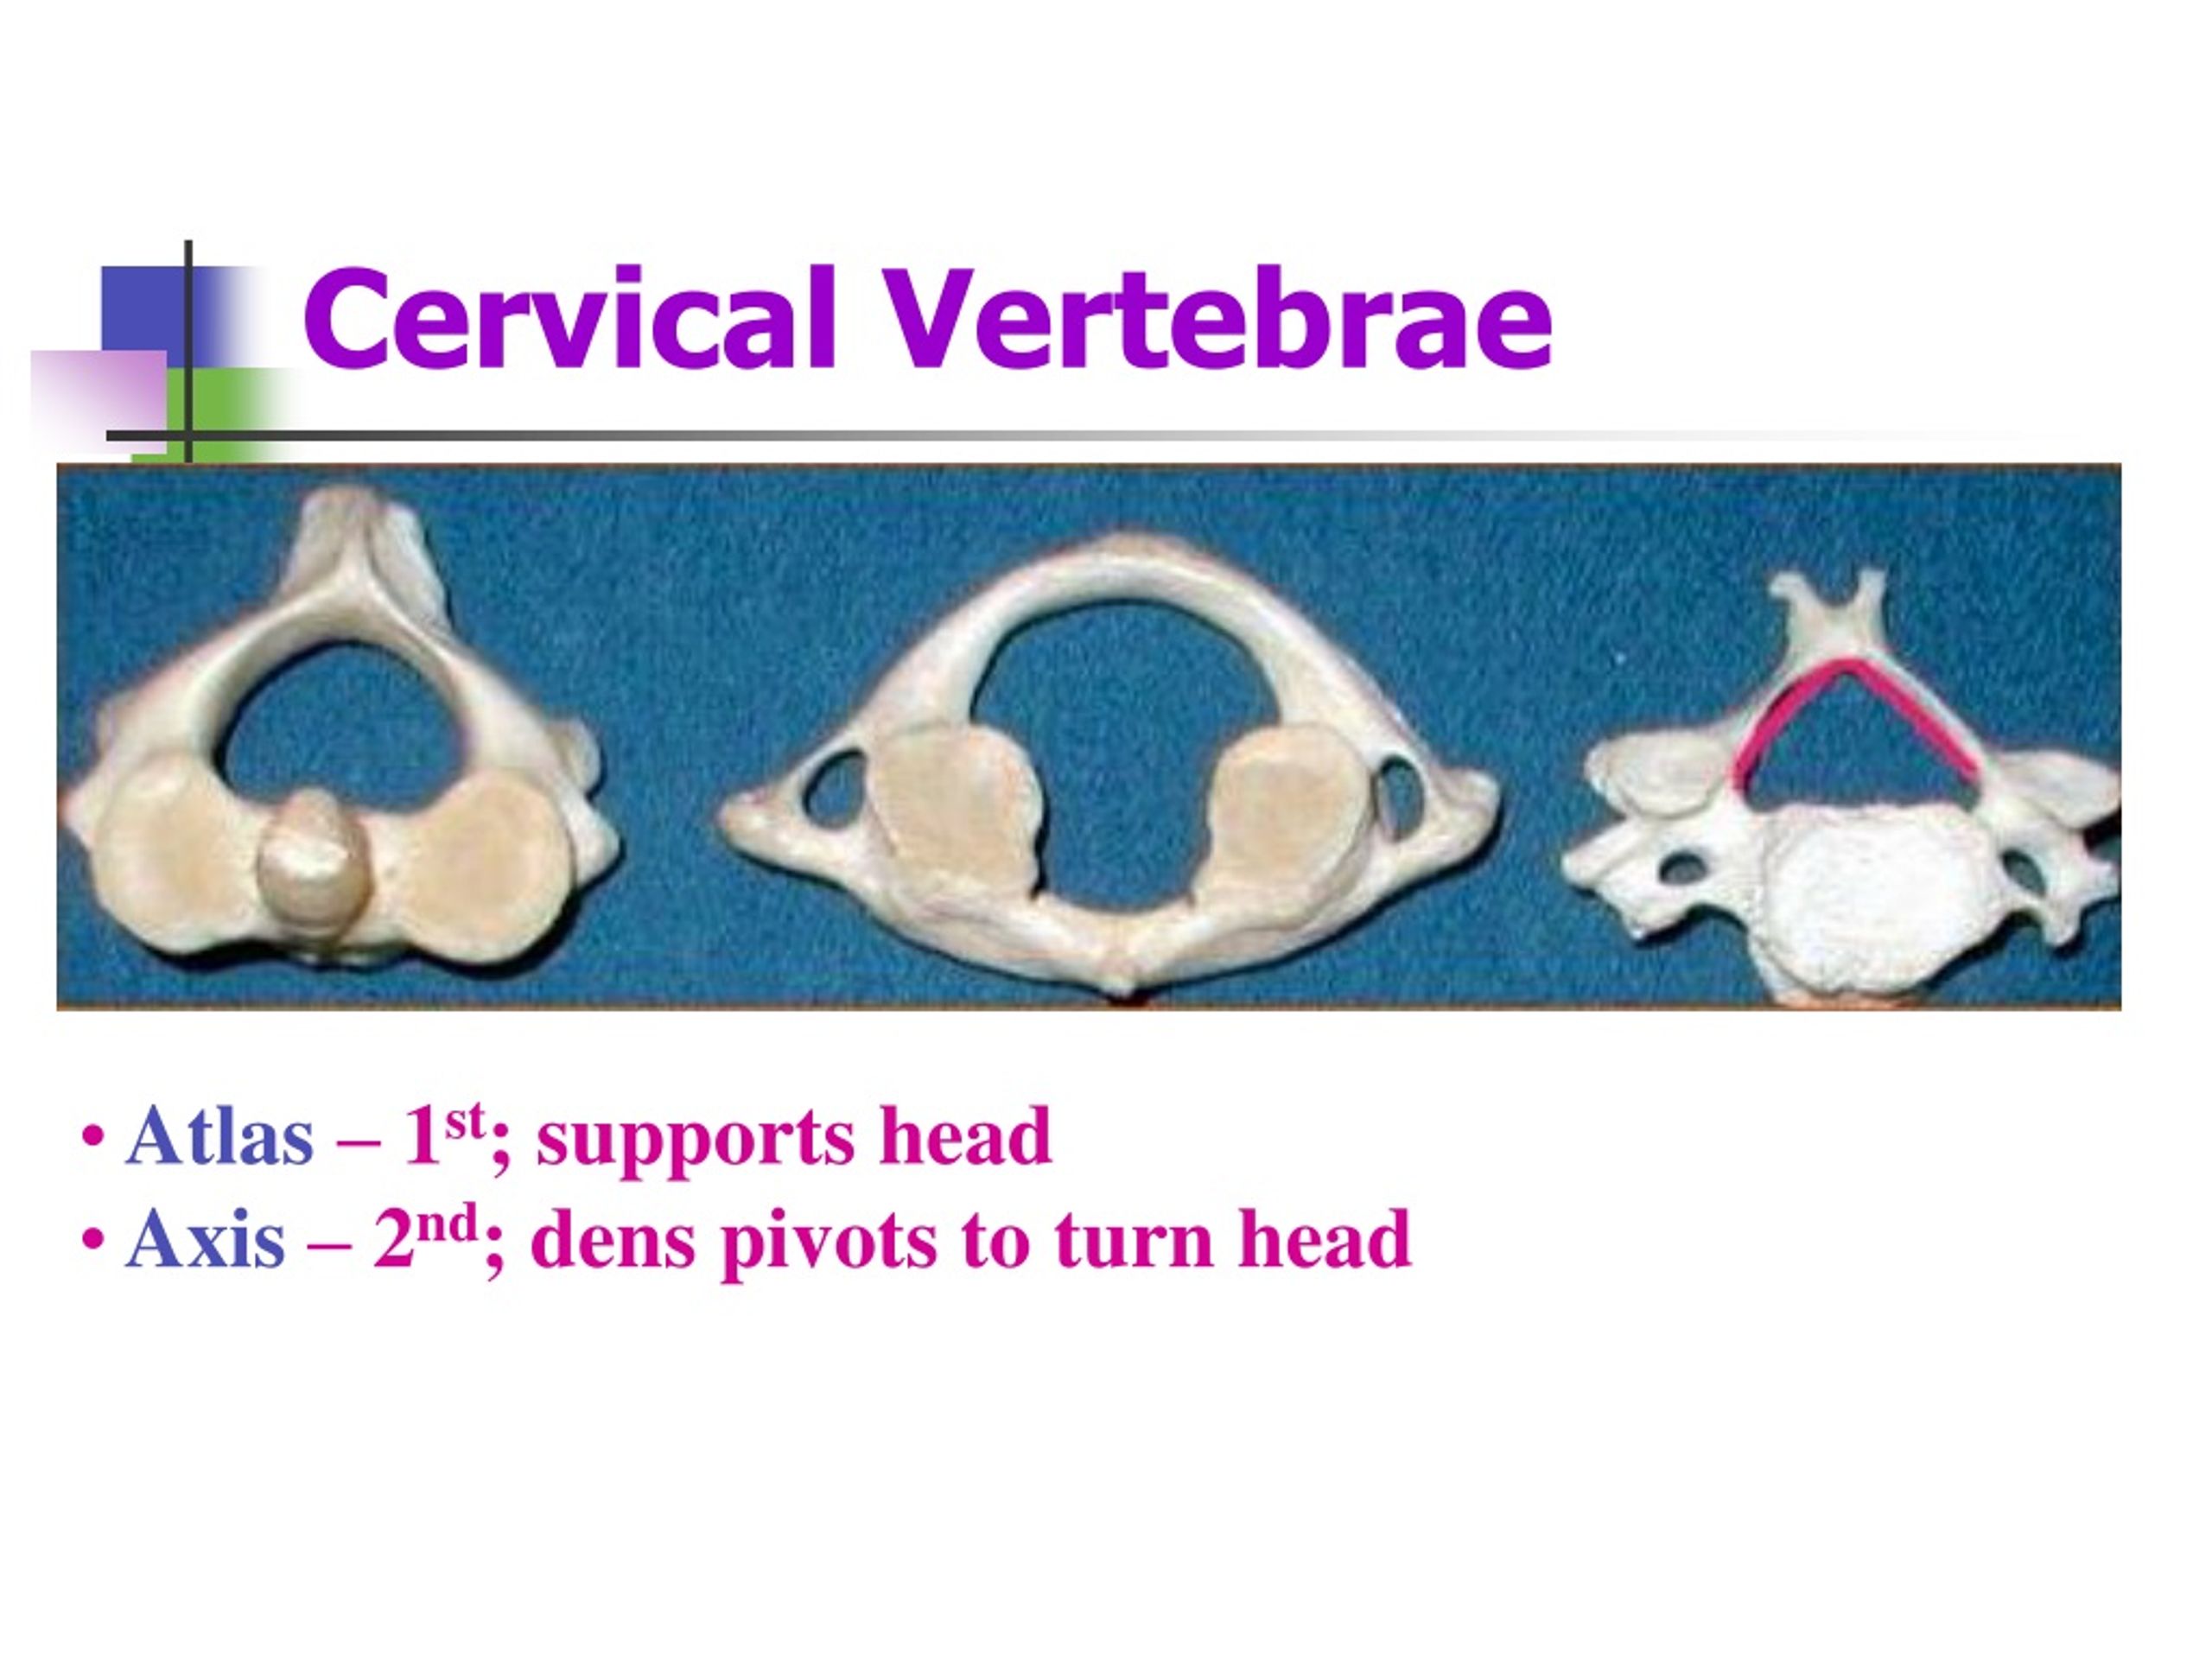 St support. Dens Axis. Secondt cervical vertebra Axis. Stages of Development of cervical vertebrae Orthodontics. Axis 2.